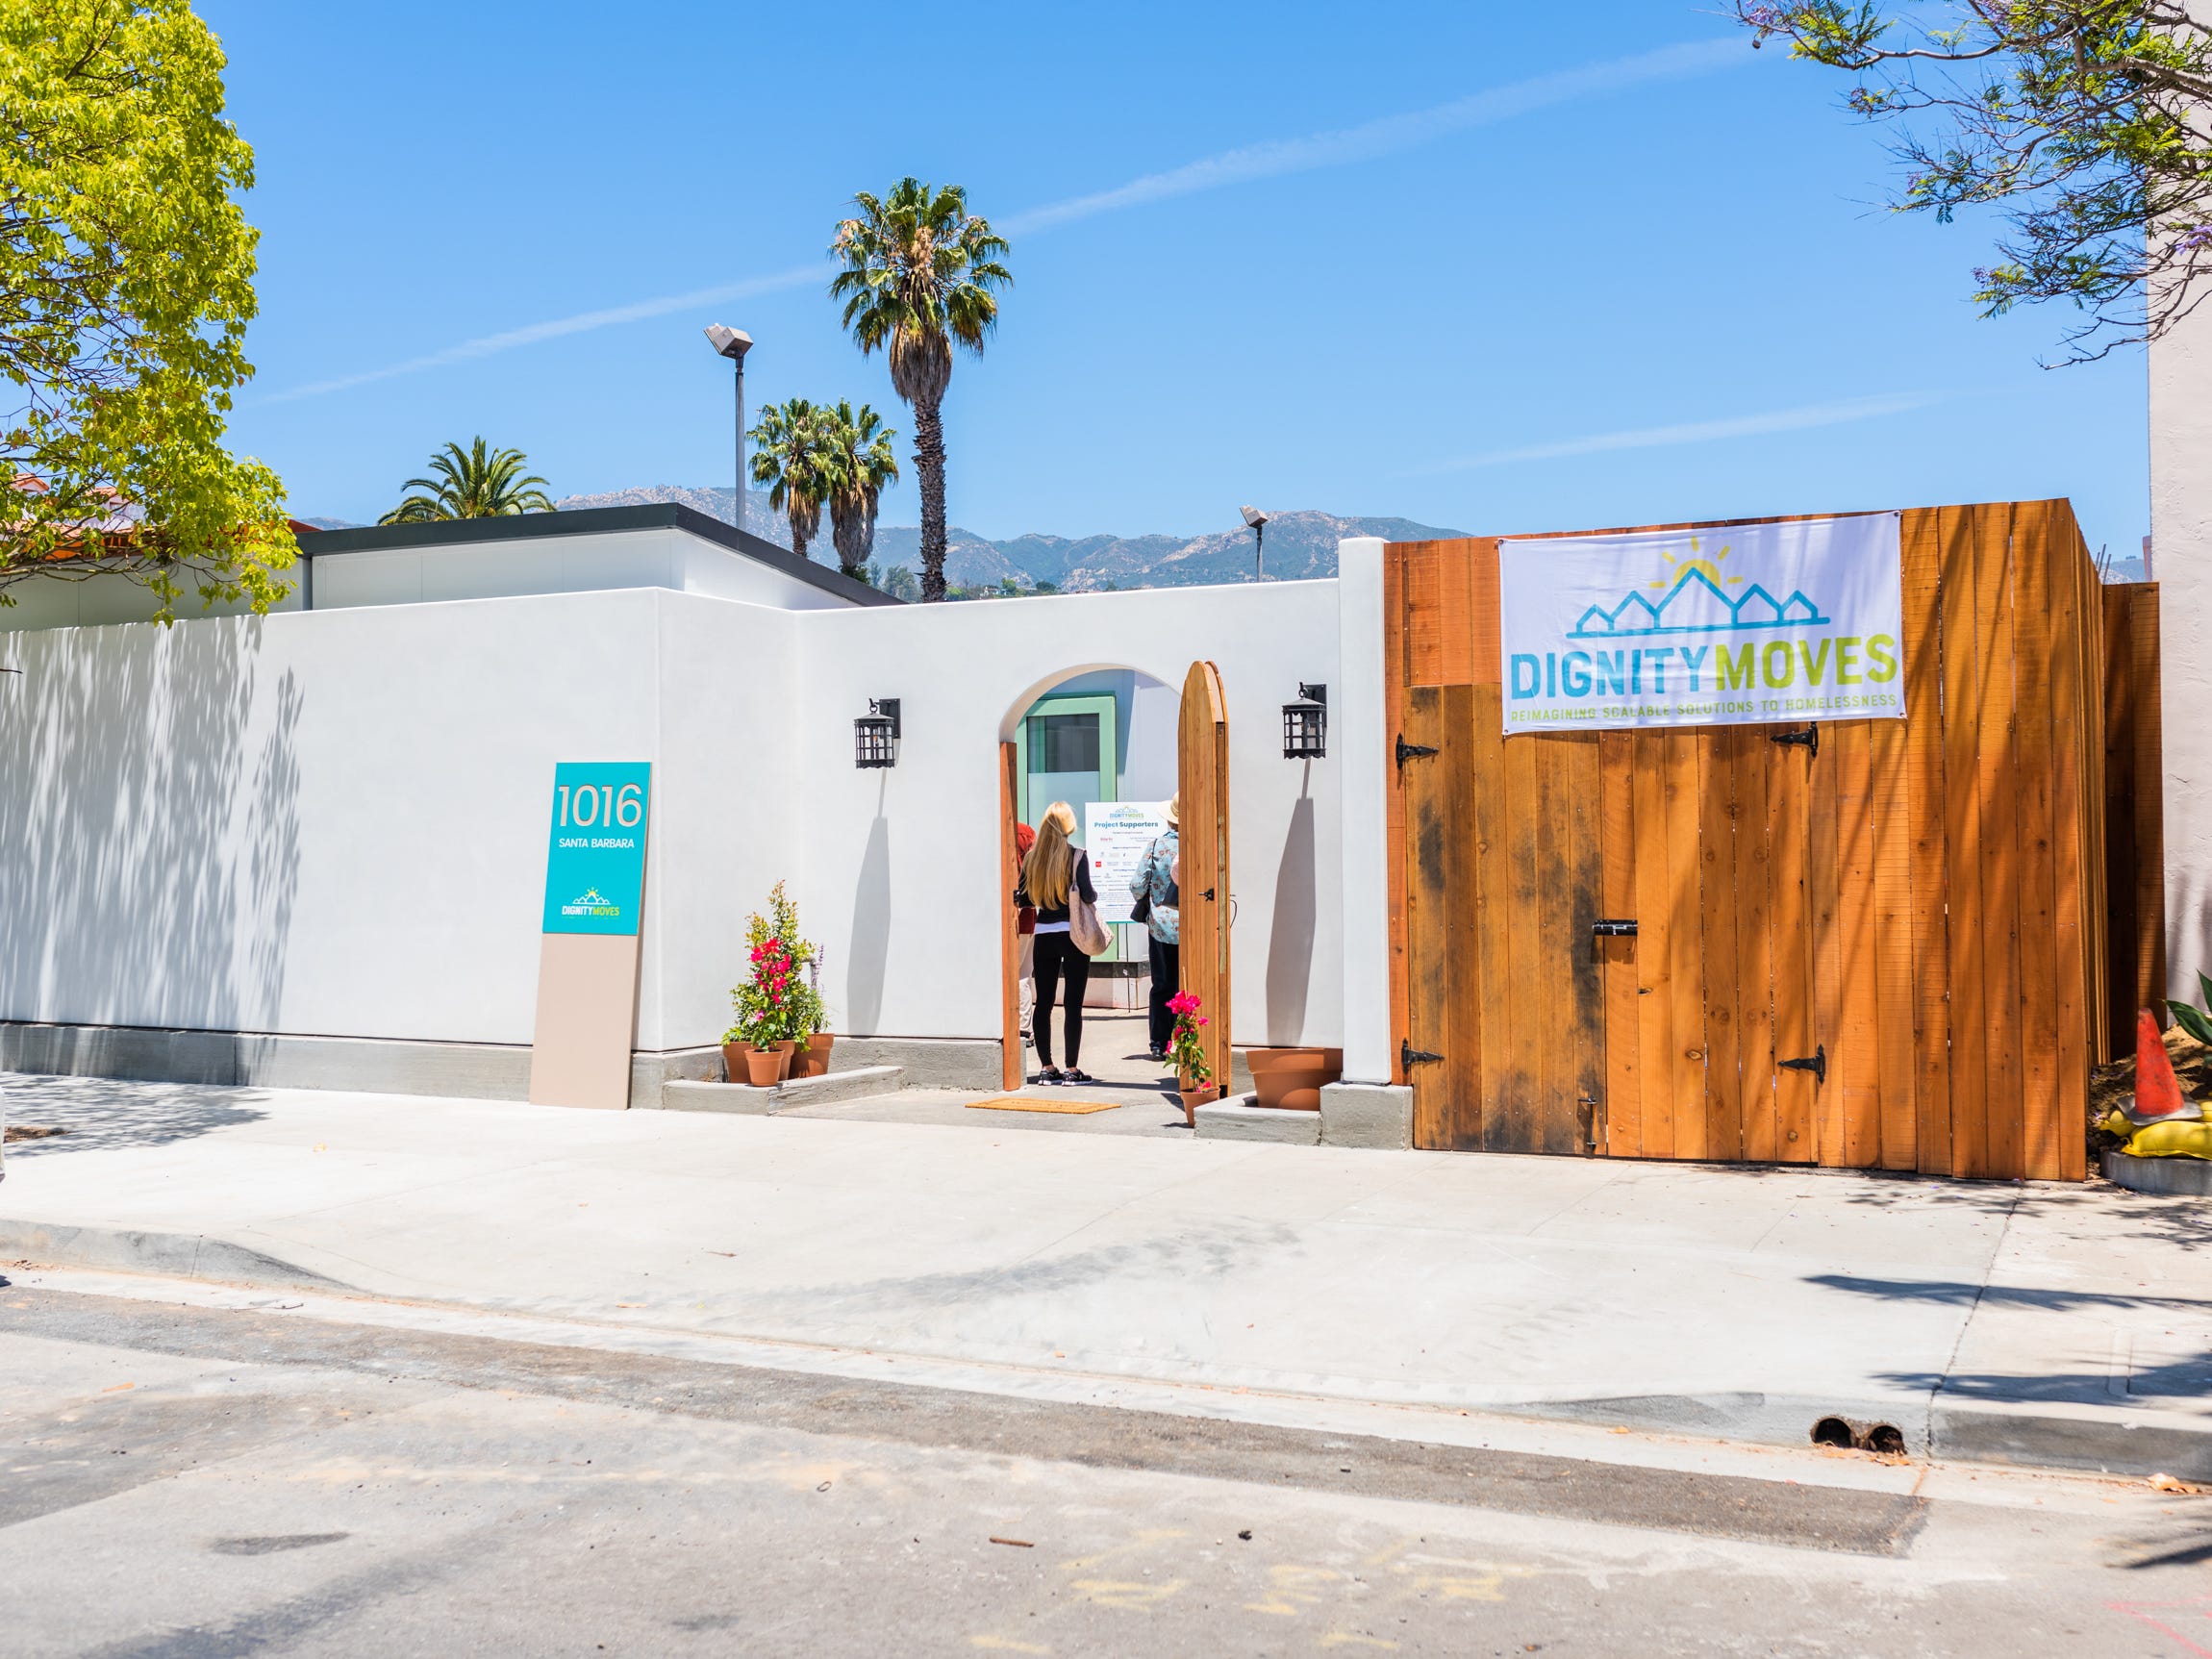 Das Äußere des DignityMoves-Standorts in Santa Barbara